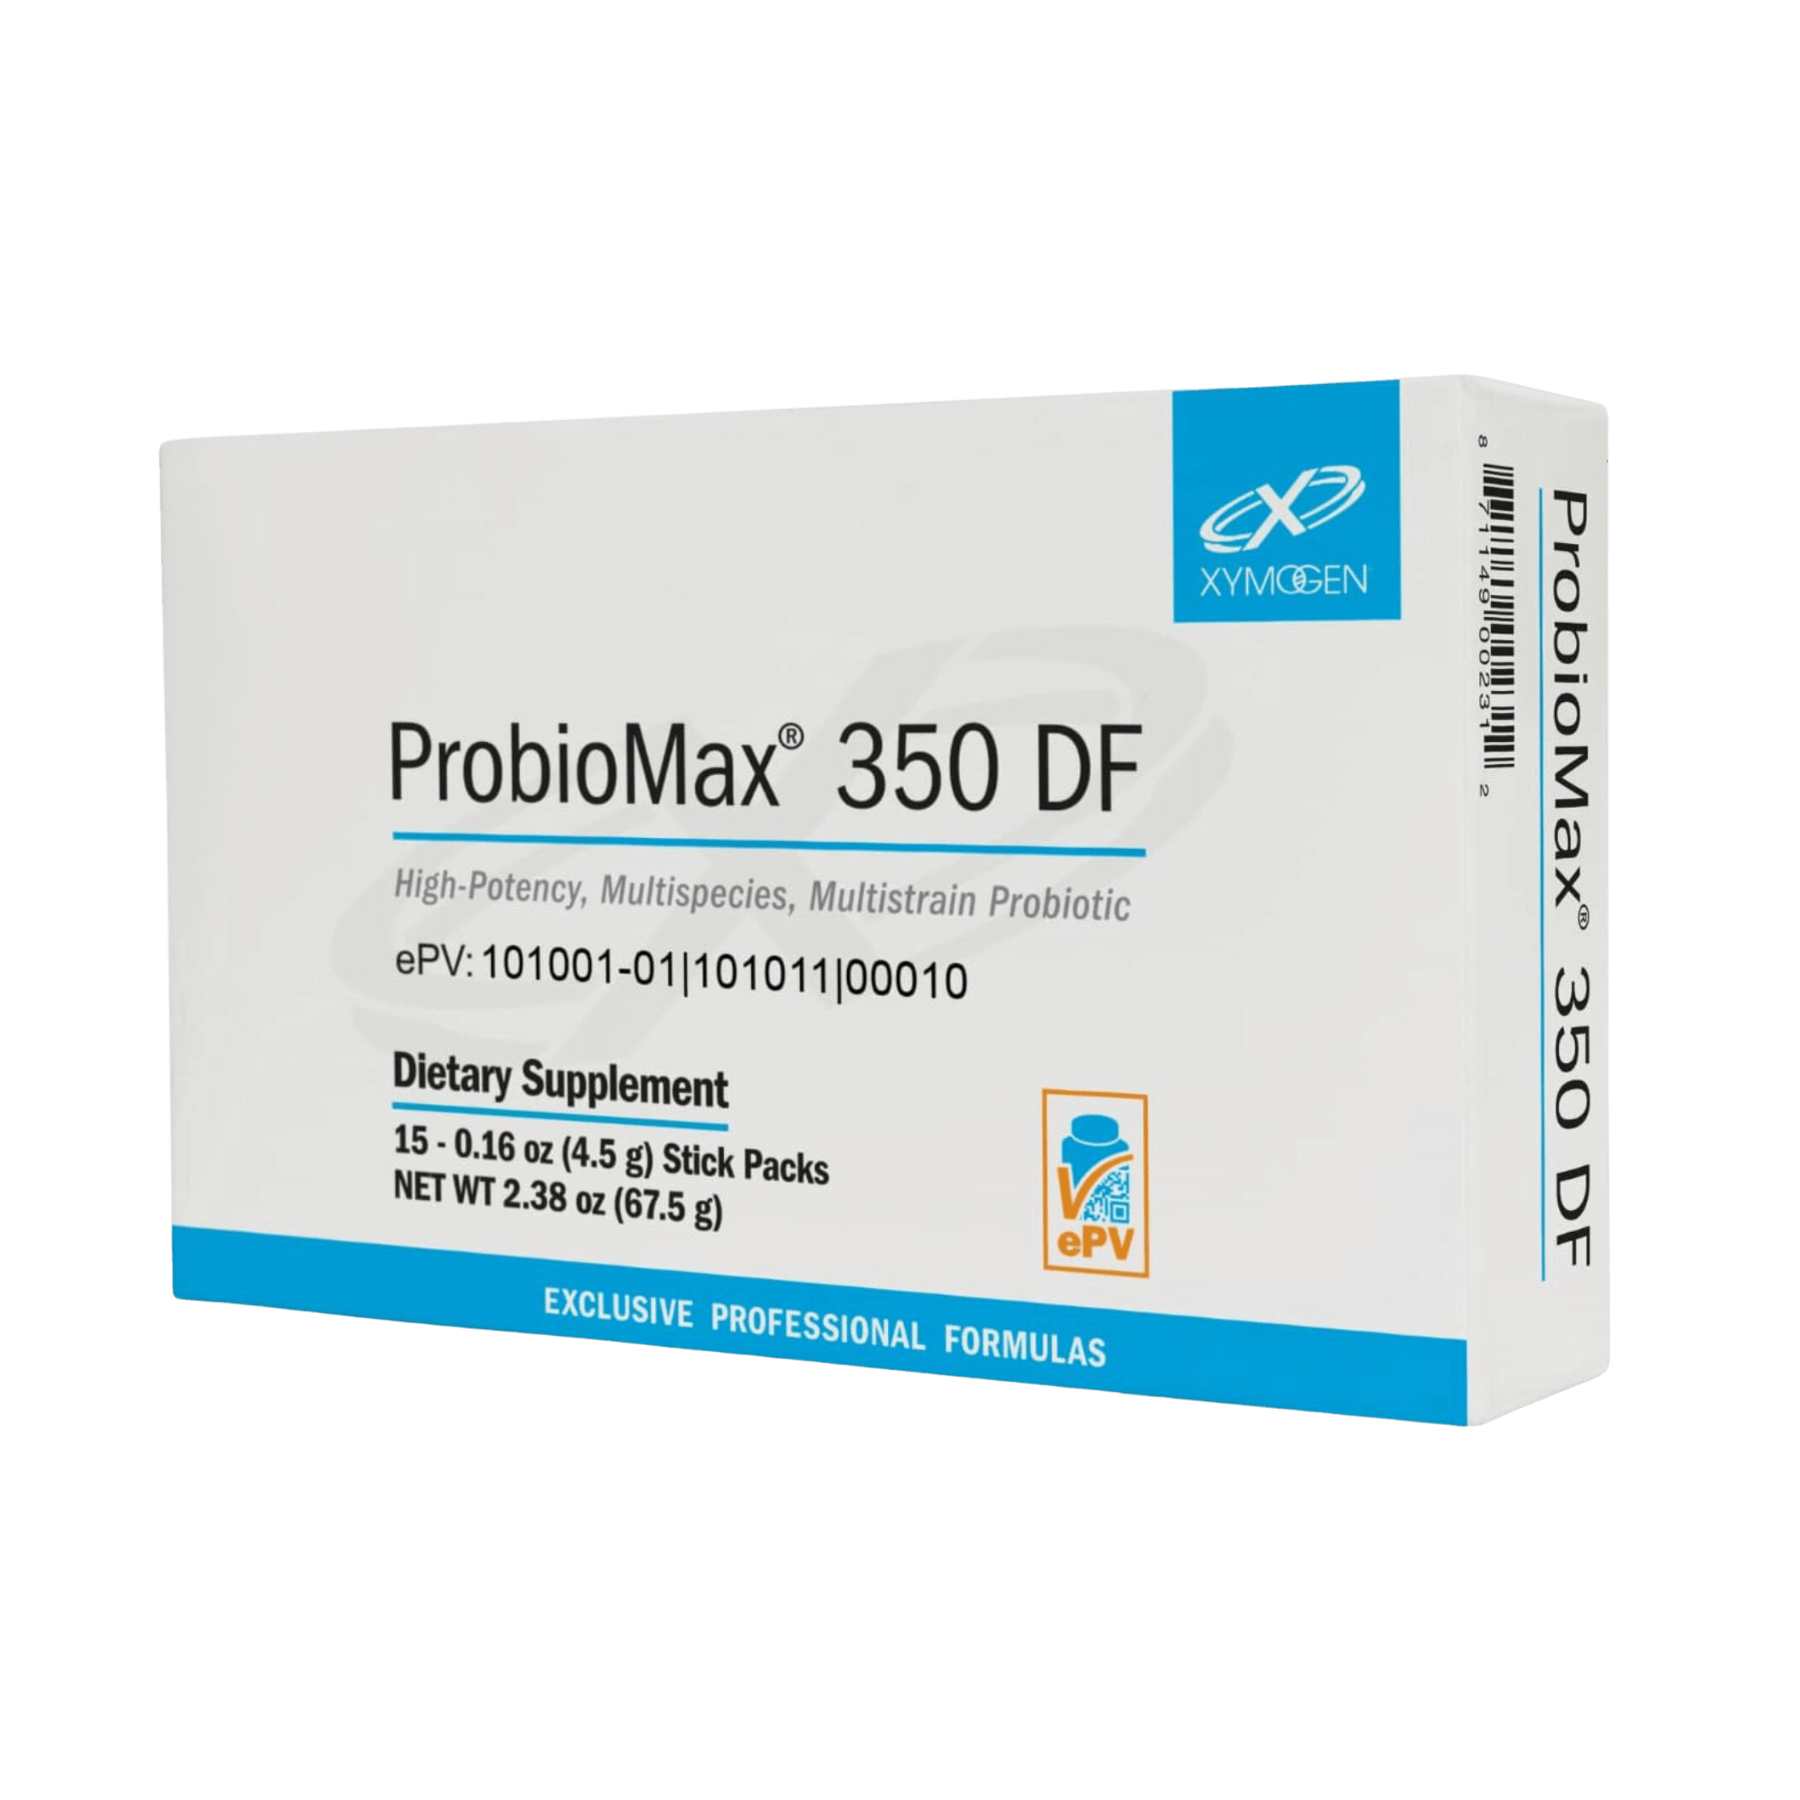 Xymogen ProbioMax 350 DF Stick Packs